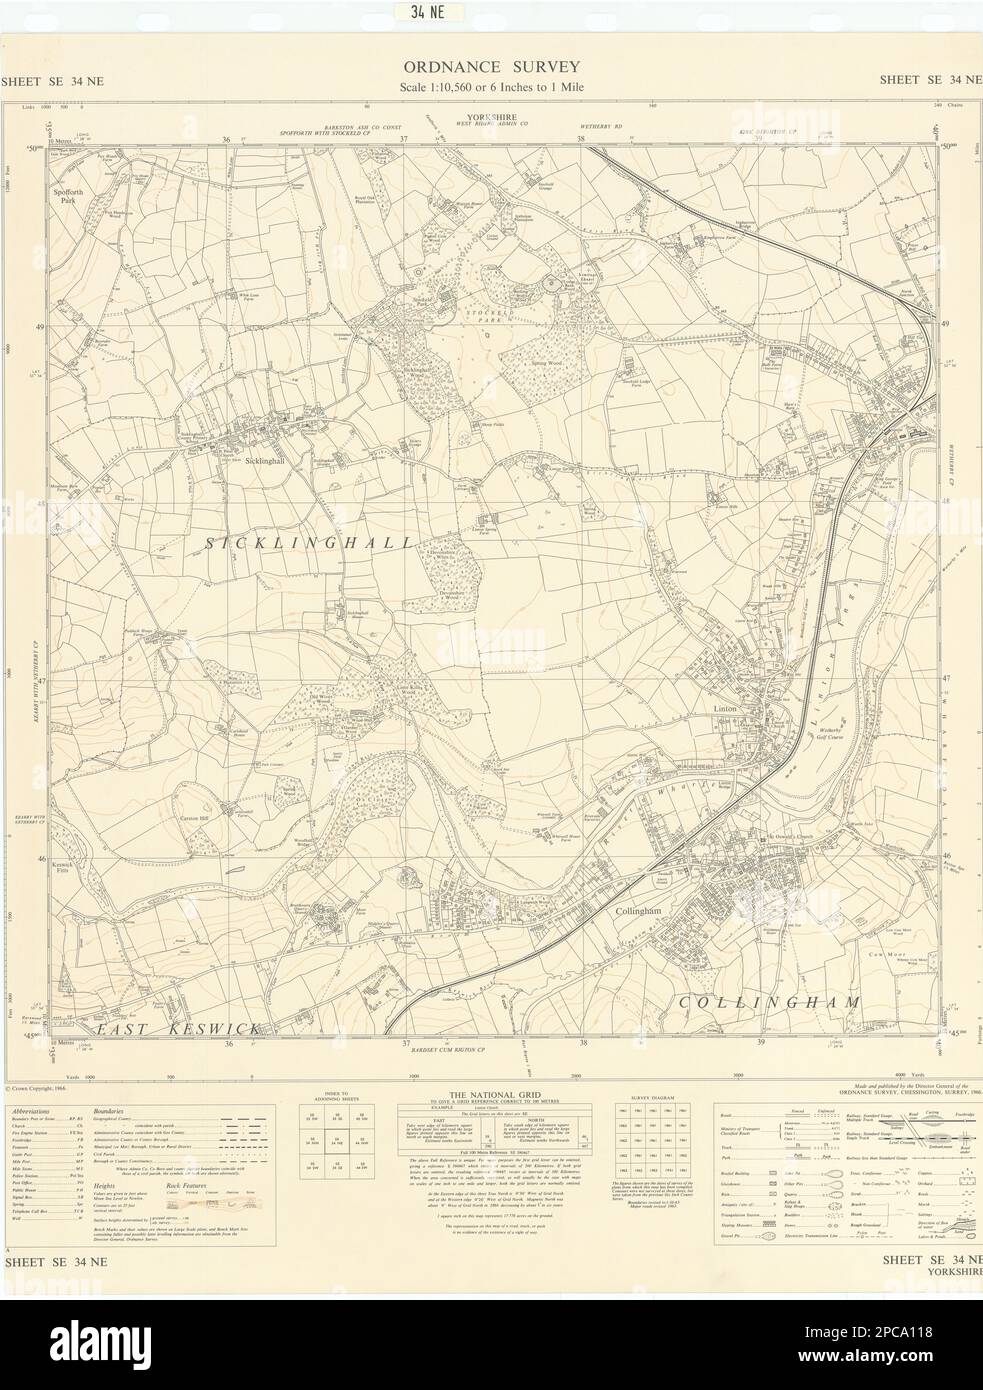 Ordnance Survey SE34NE Yorks Collingham Linton Sicklinghall Wetherby 1966 Karte Stockfoto